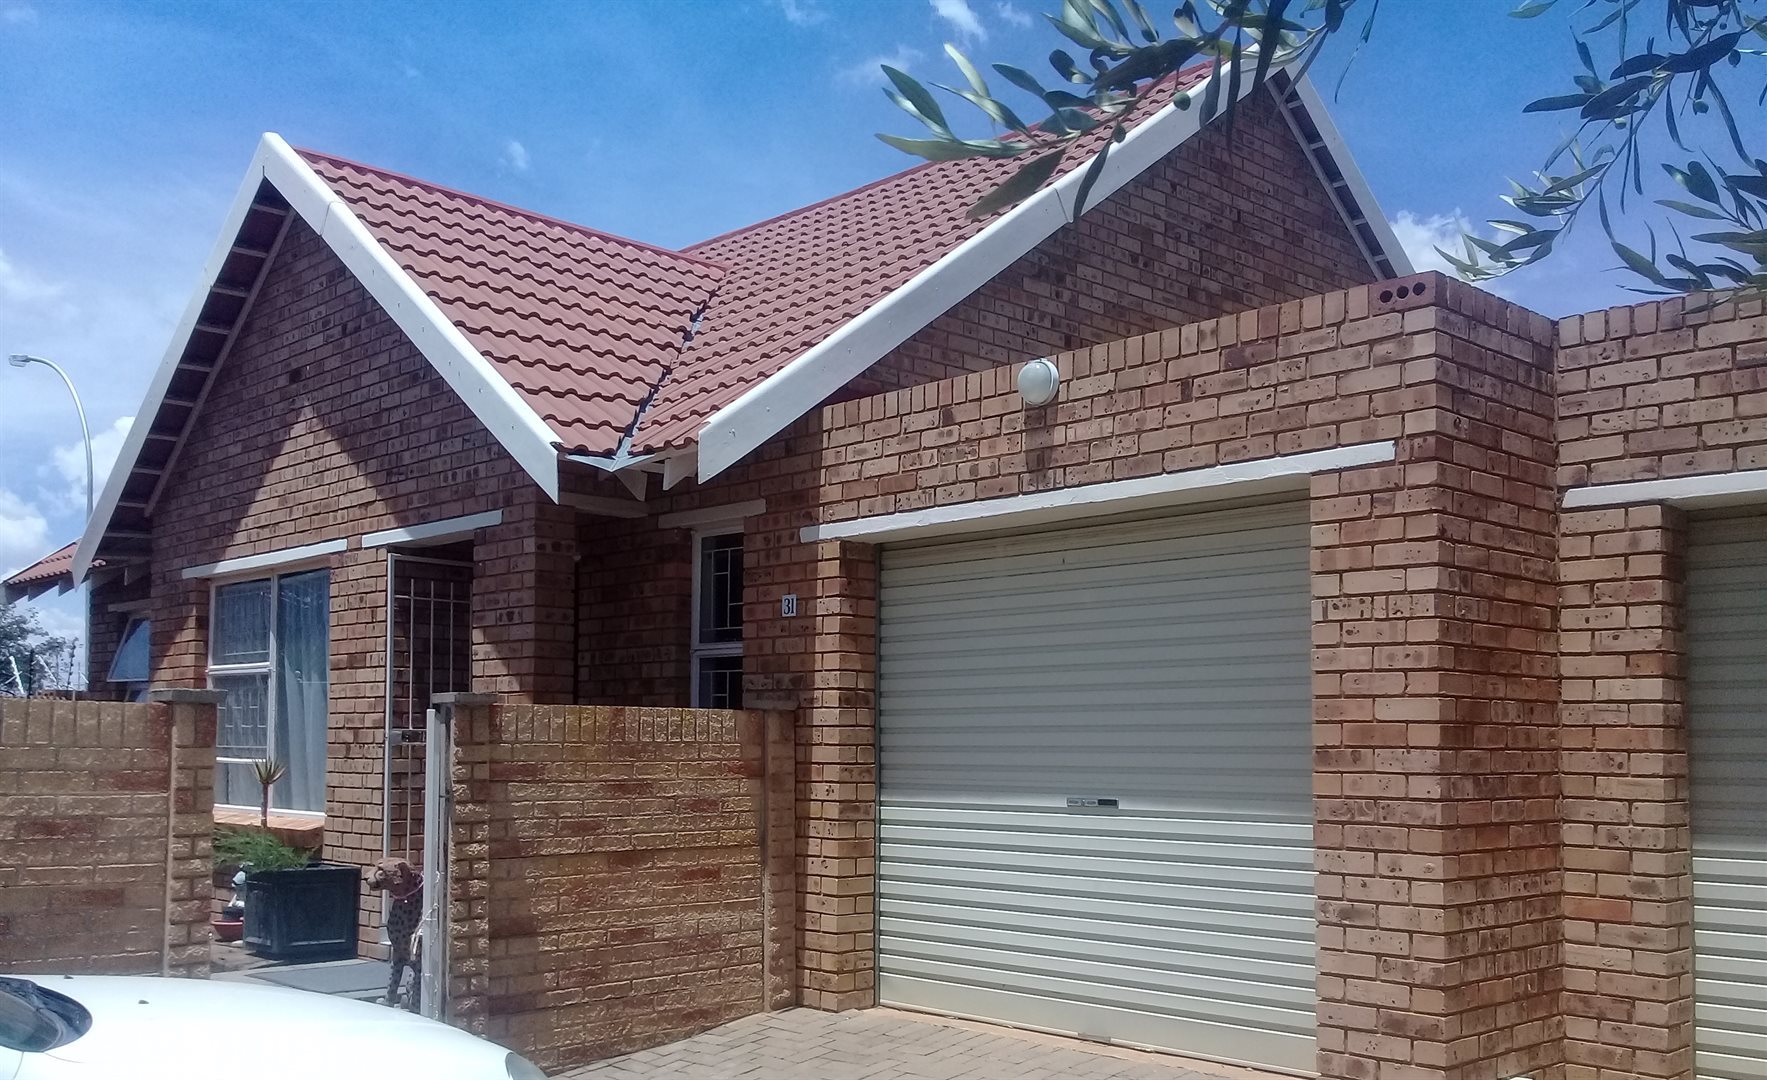  Bloemfontein  Bloemfontein  Property Houses  For Sale  